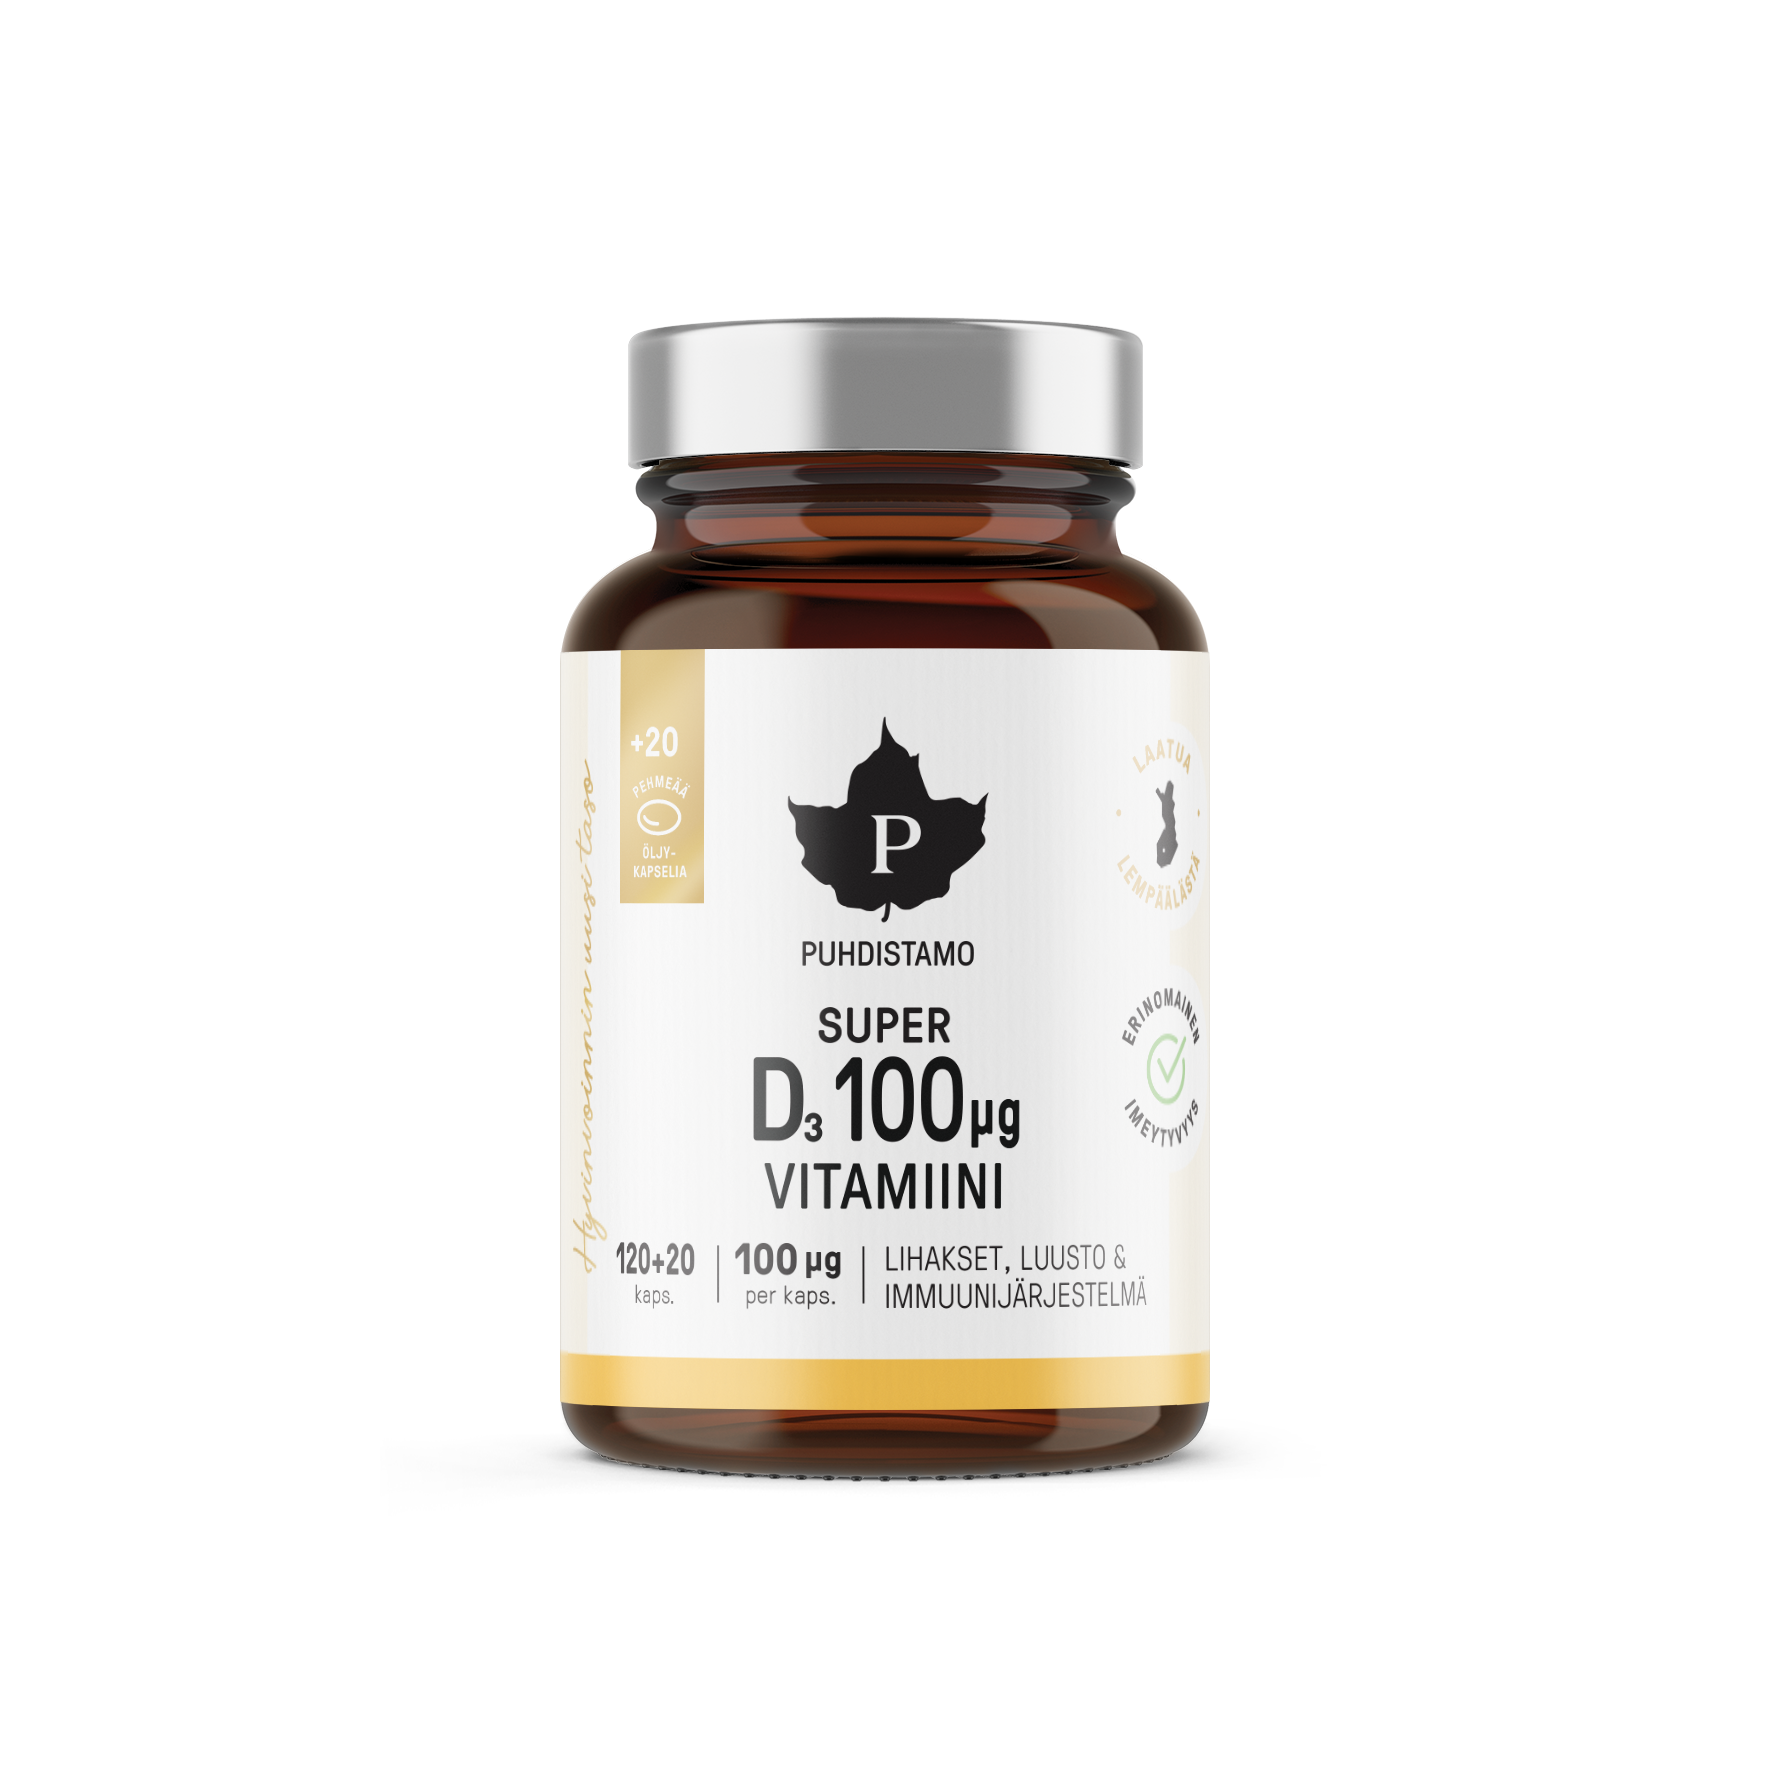 Puhdistamo Super D-Vitamiini 100 μg Kampanjapakkaus 120+20 kaps.